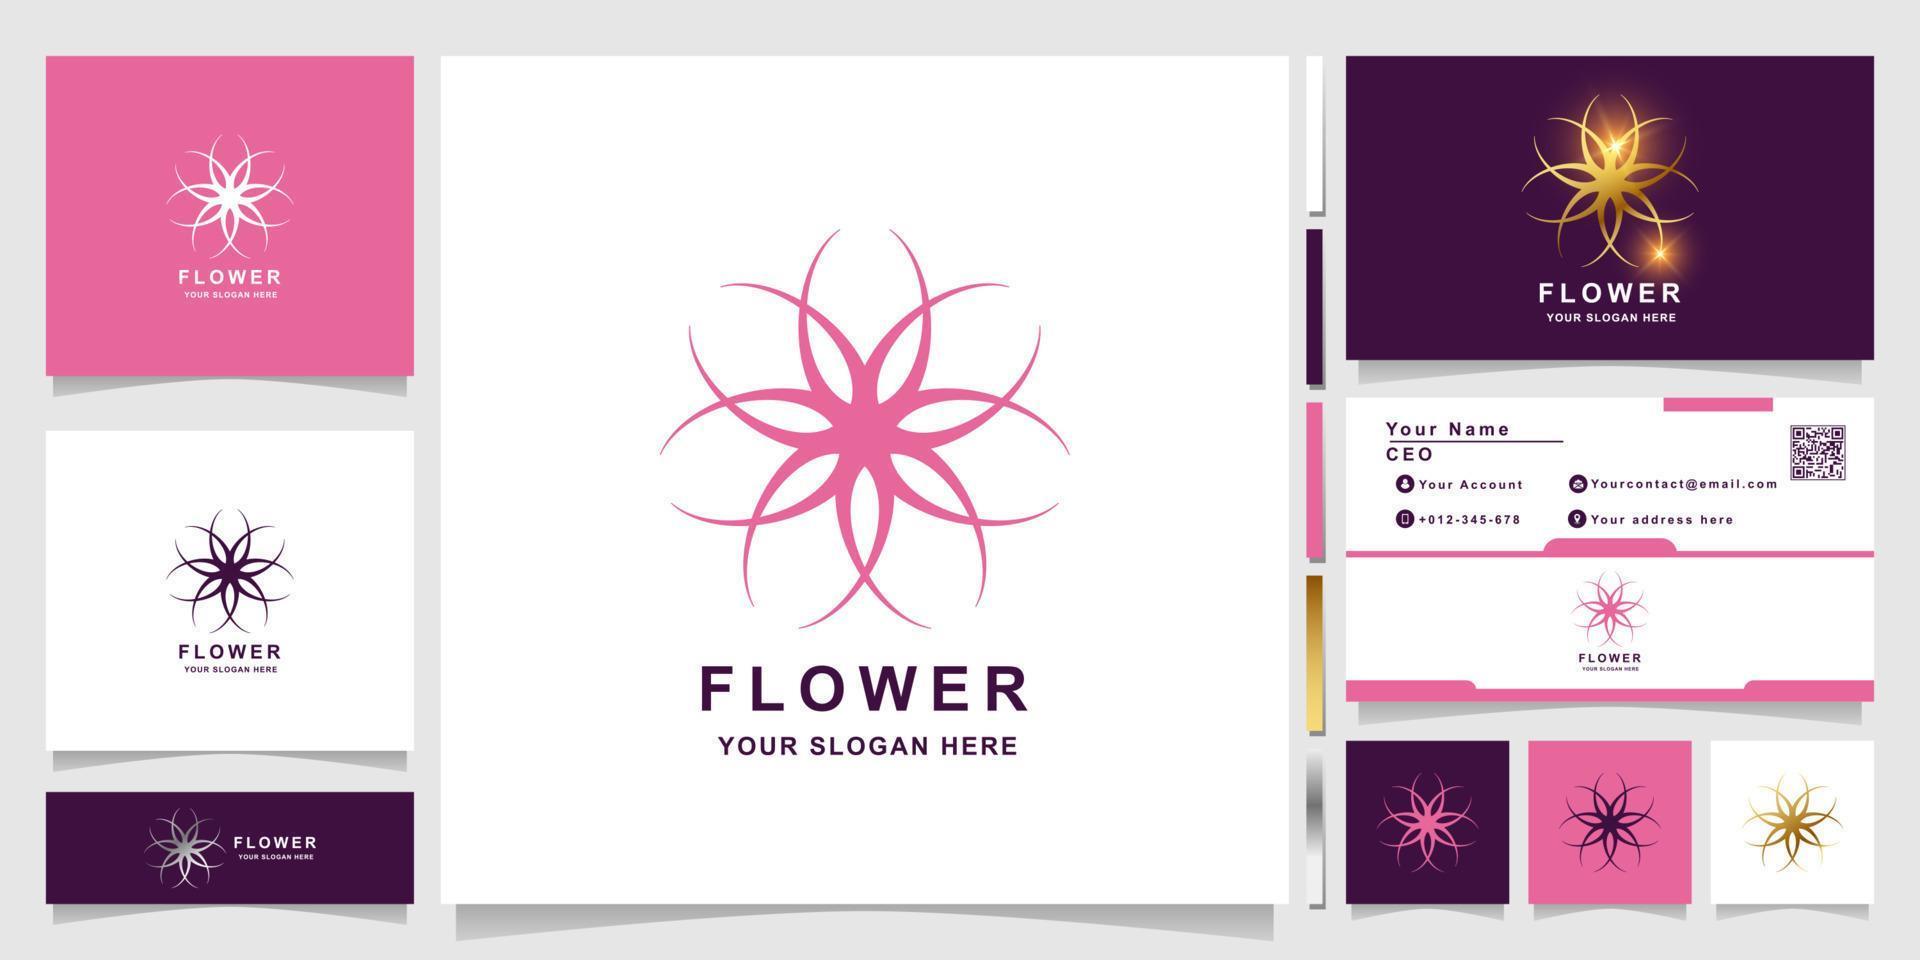 Minimalist elegant ornament flower logo template with business card design vector